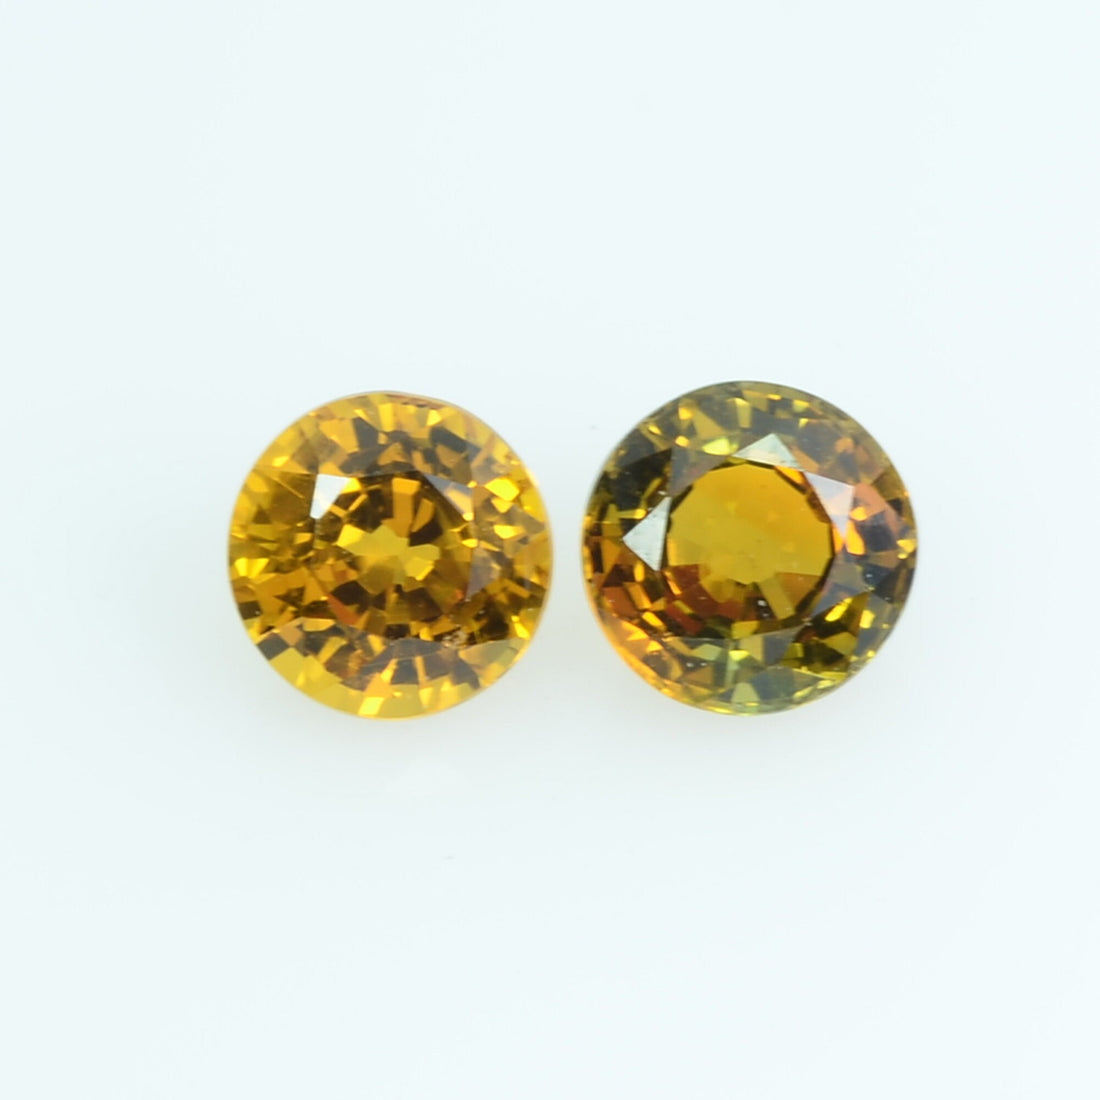 4.5 mm Natural Yellow Sapphire Loose Gemstone Round Cut